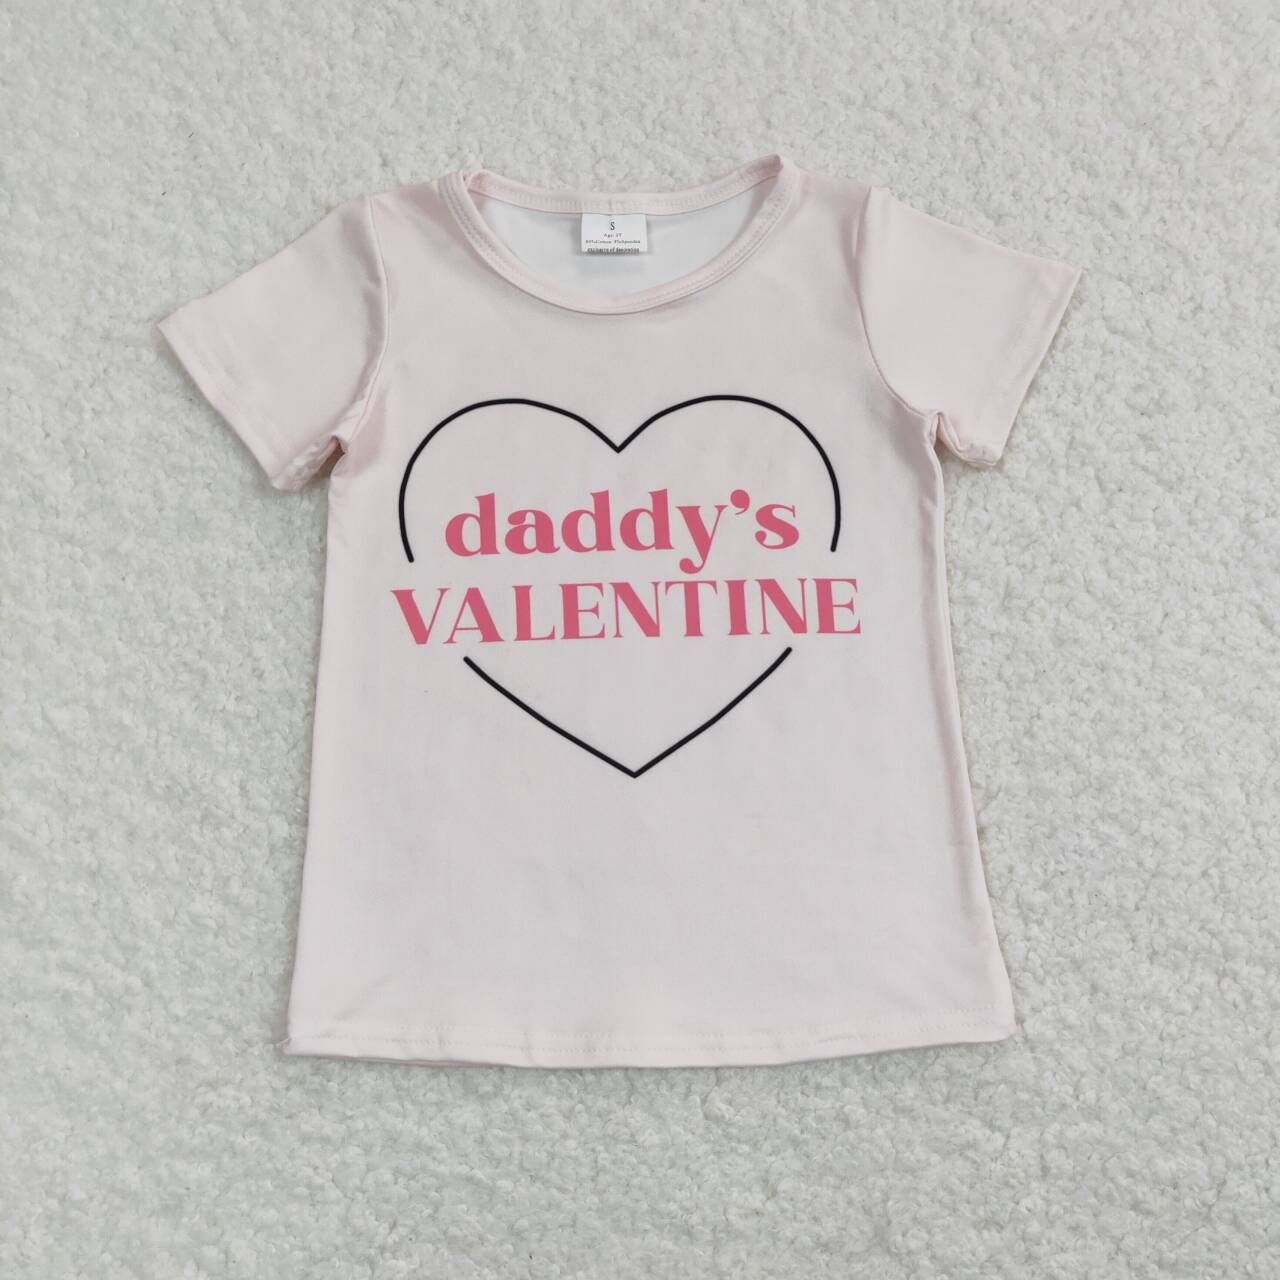 GT0452 daddy's valentine pink short sleeve top